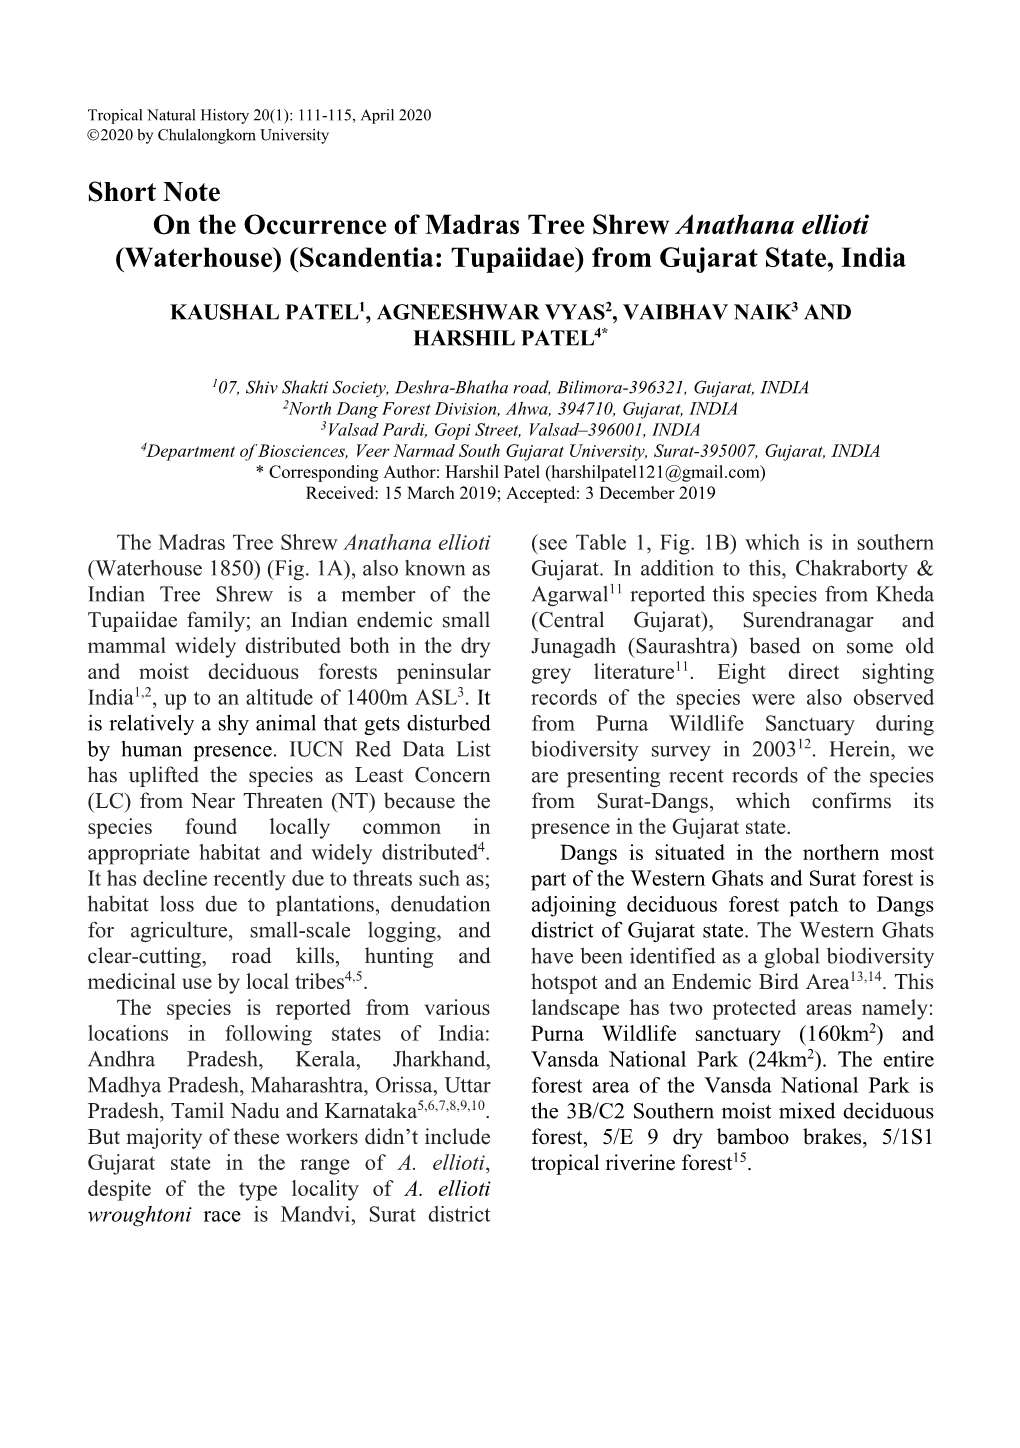 Short Note on the Occurrence of Madras Tree Shrew Anathana Ellioti (Waterhouse) (Scandentia: Tupaiidae) from Gujarat State, India